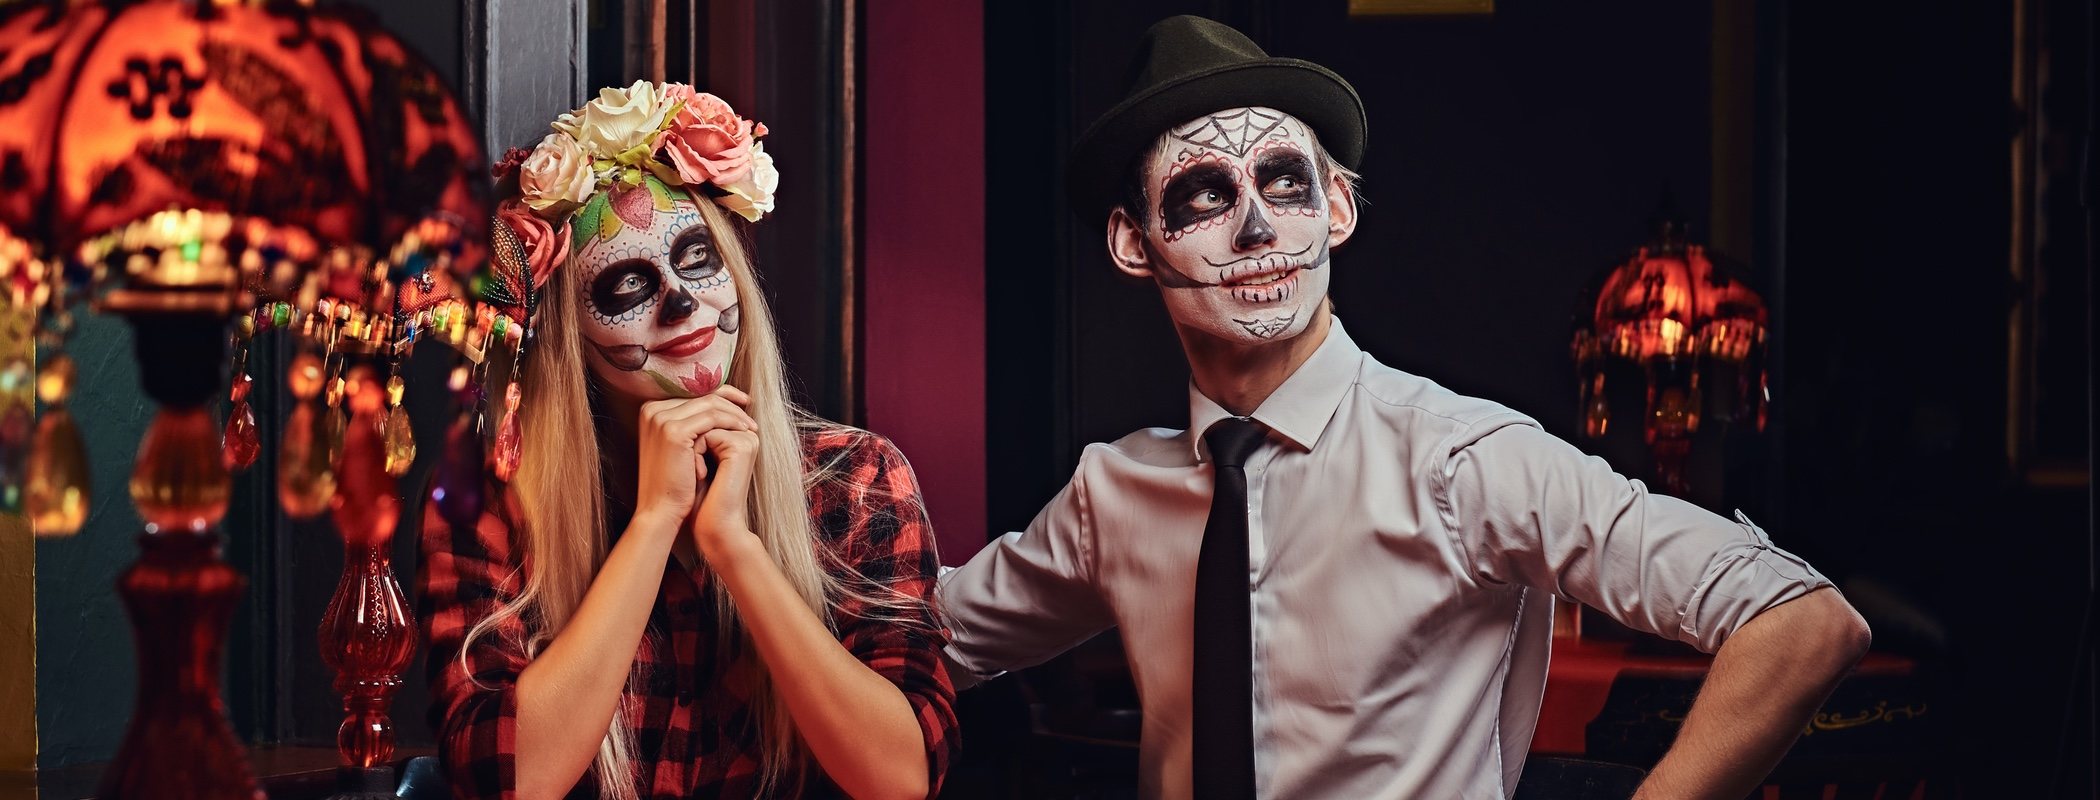 Sentimiento de culpa Peaje Favor 20 frases para enamorar a tu pareja en Halloween - Bekia Pareja